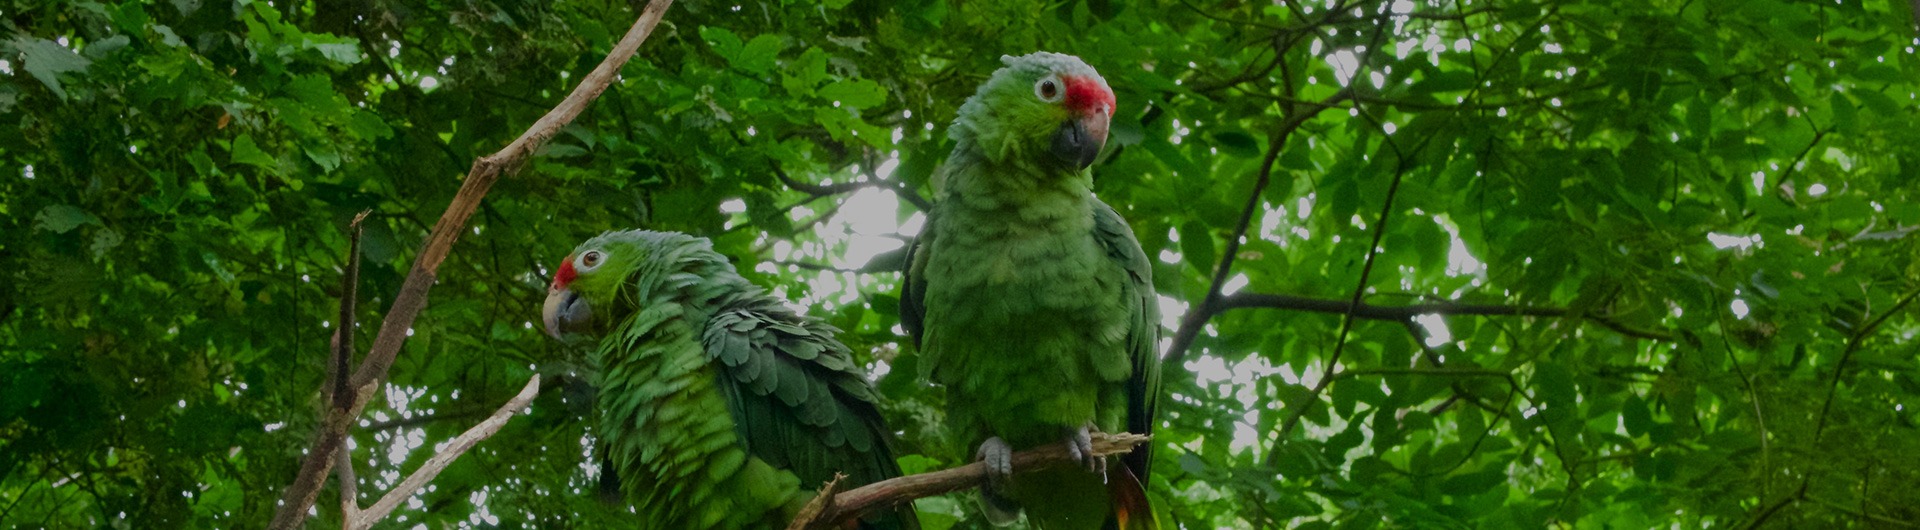 Tropic bird in the rainforest of Ecuador